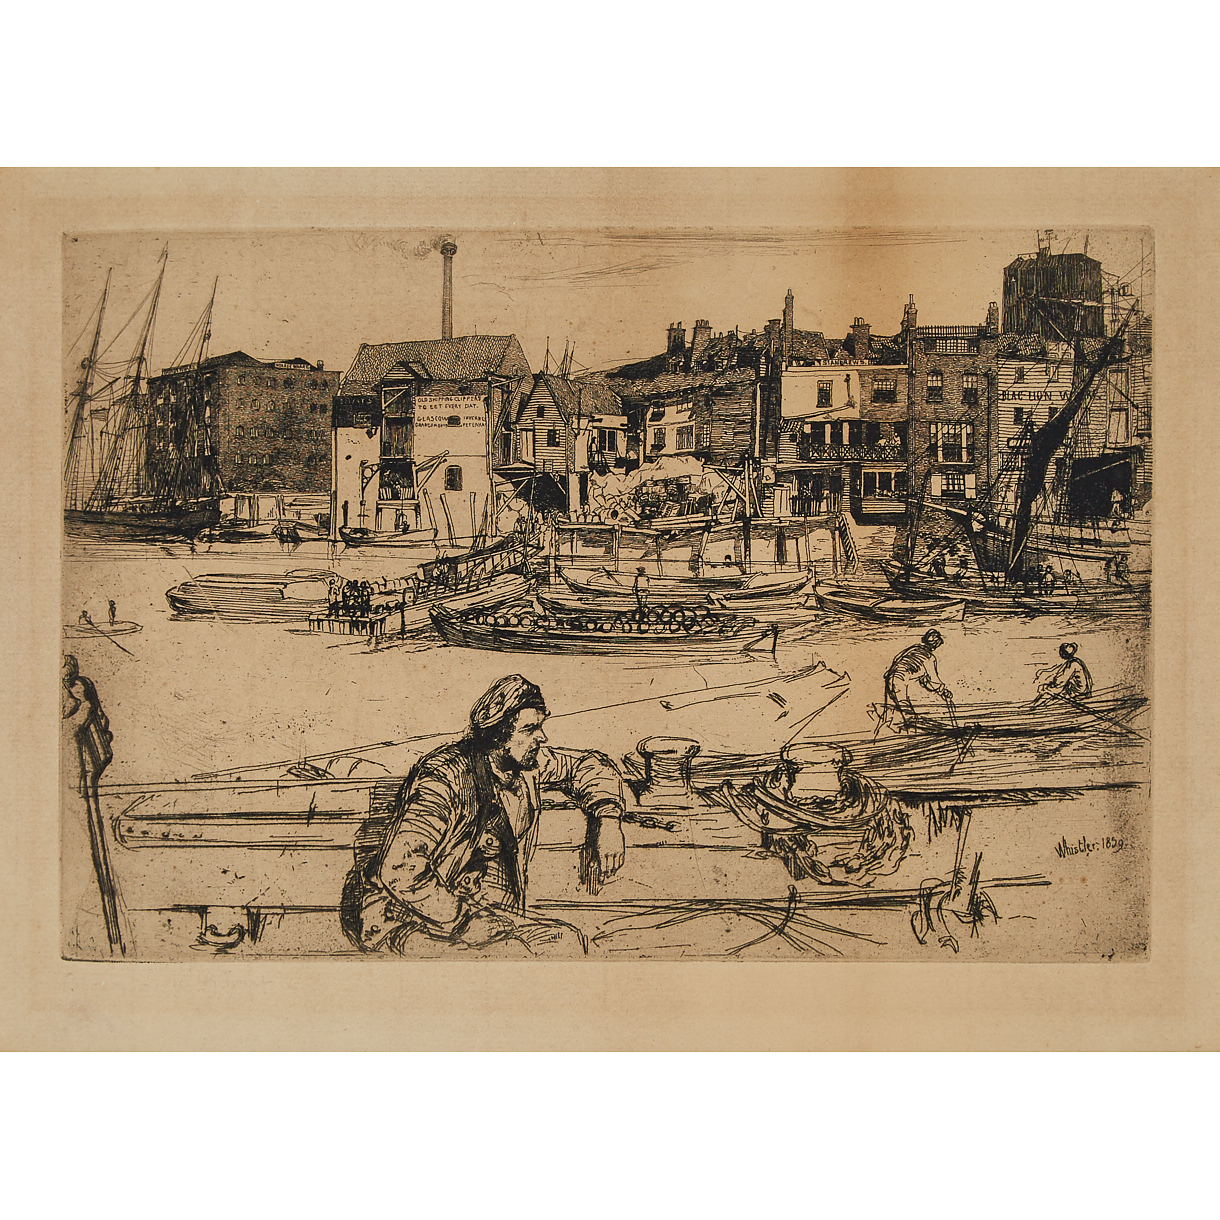 James Abbott McNeill Whistler (1834-1903), American